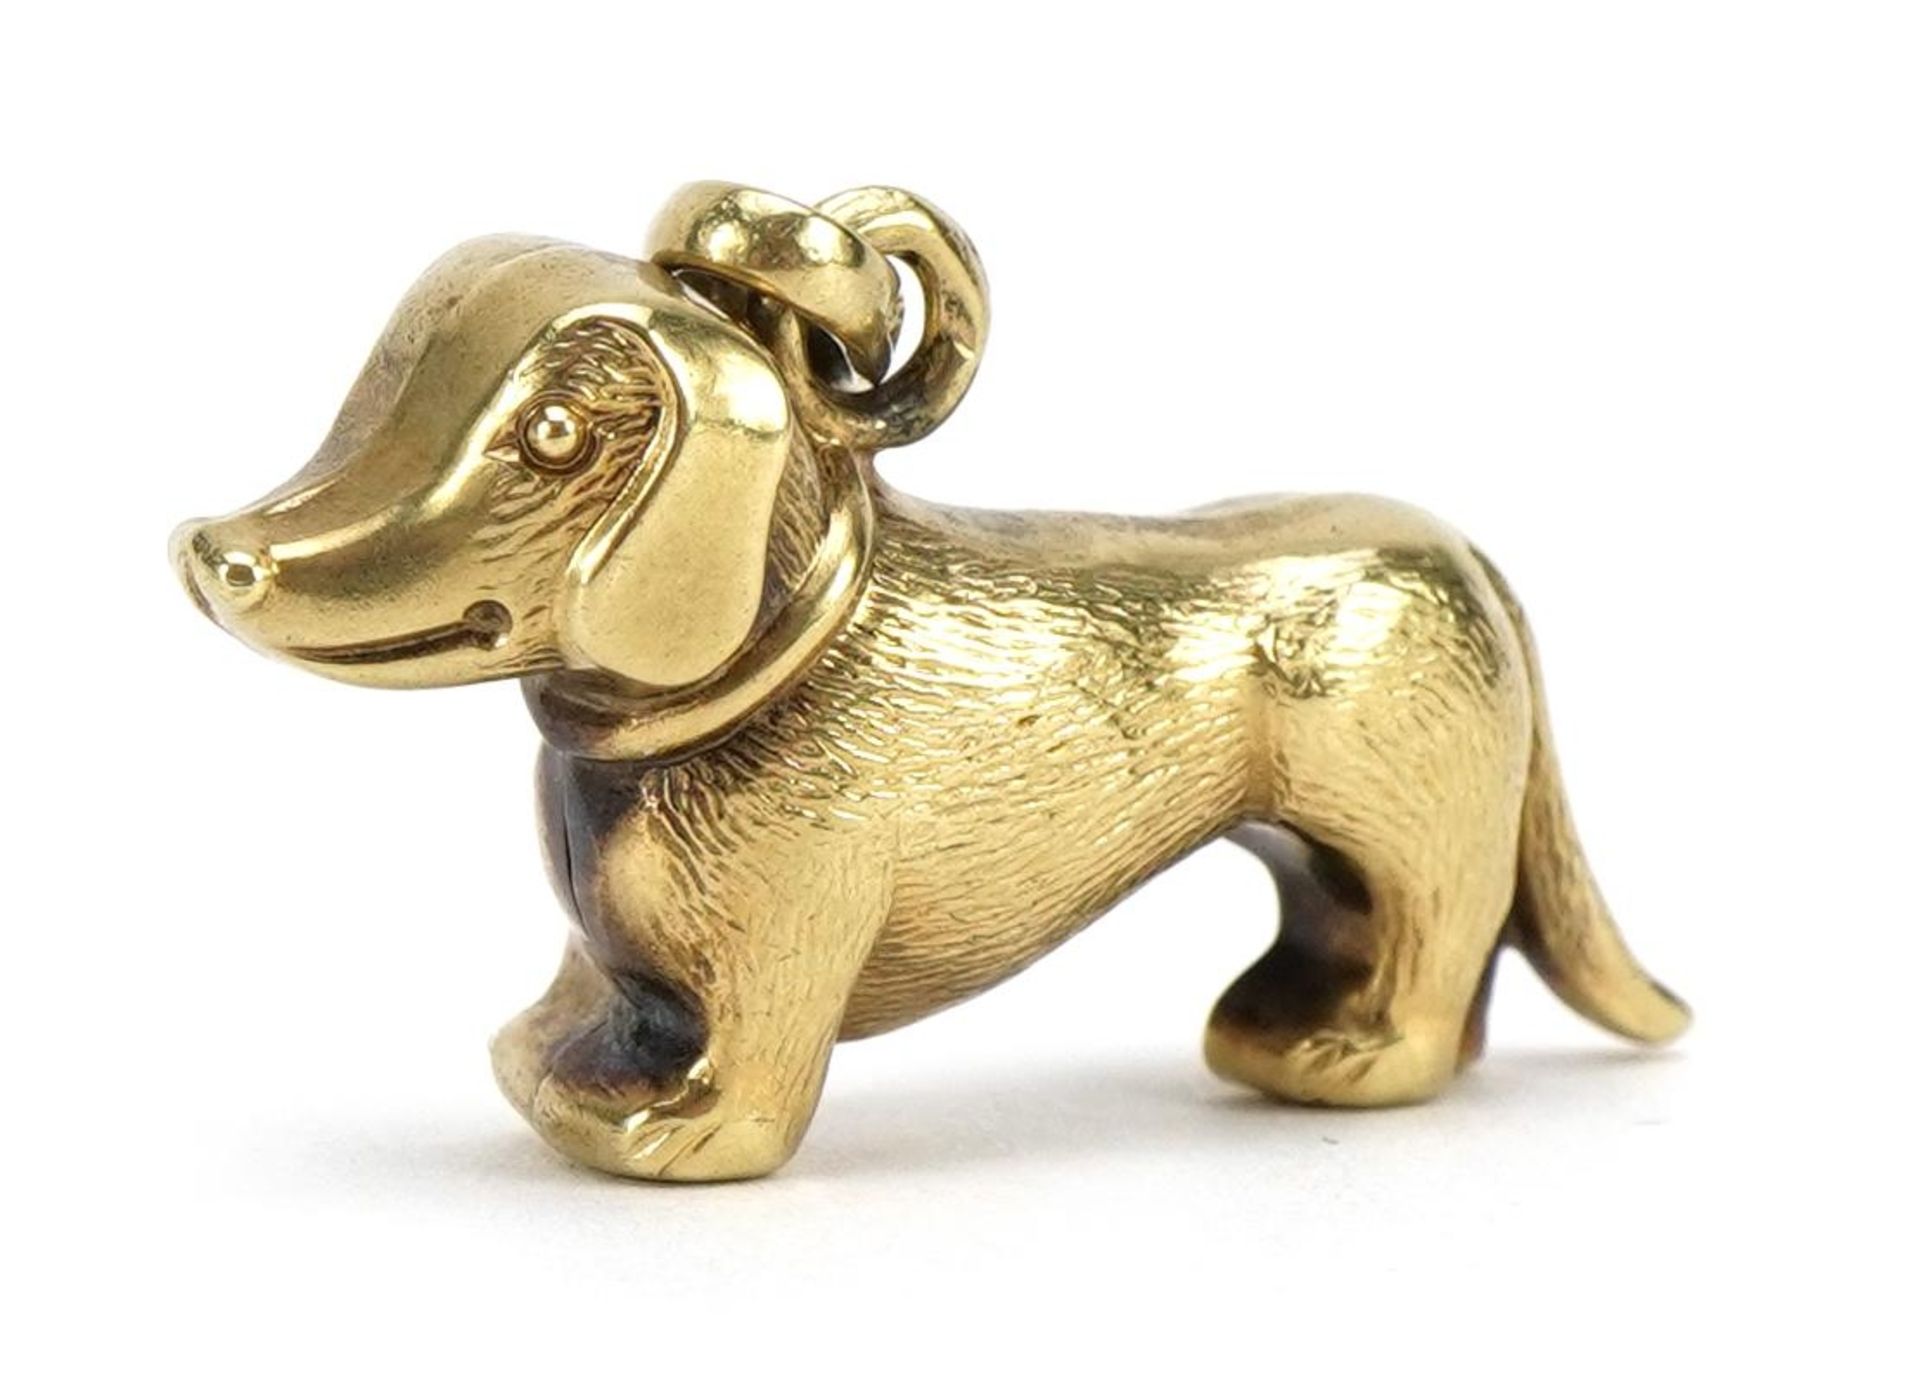 9ct gold Dachshund dog charm, 2.7cm wide, 1.8g